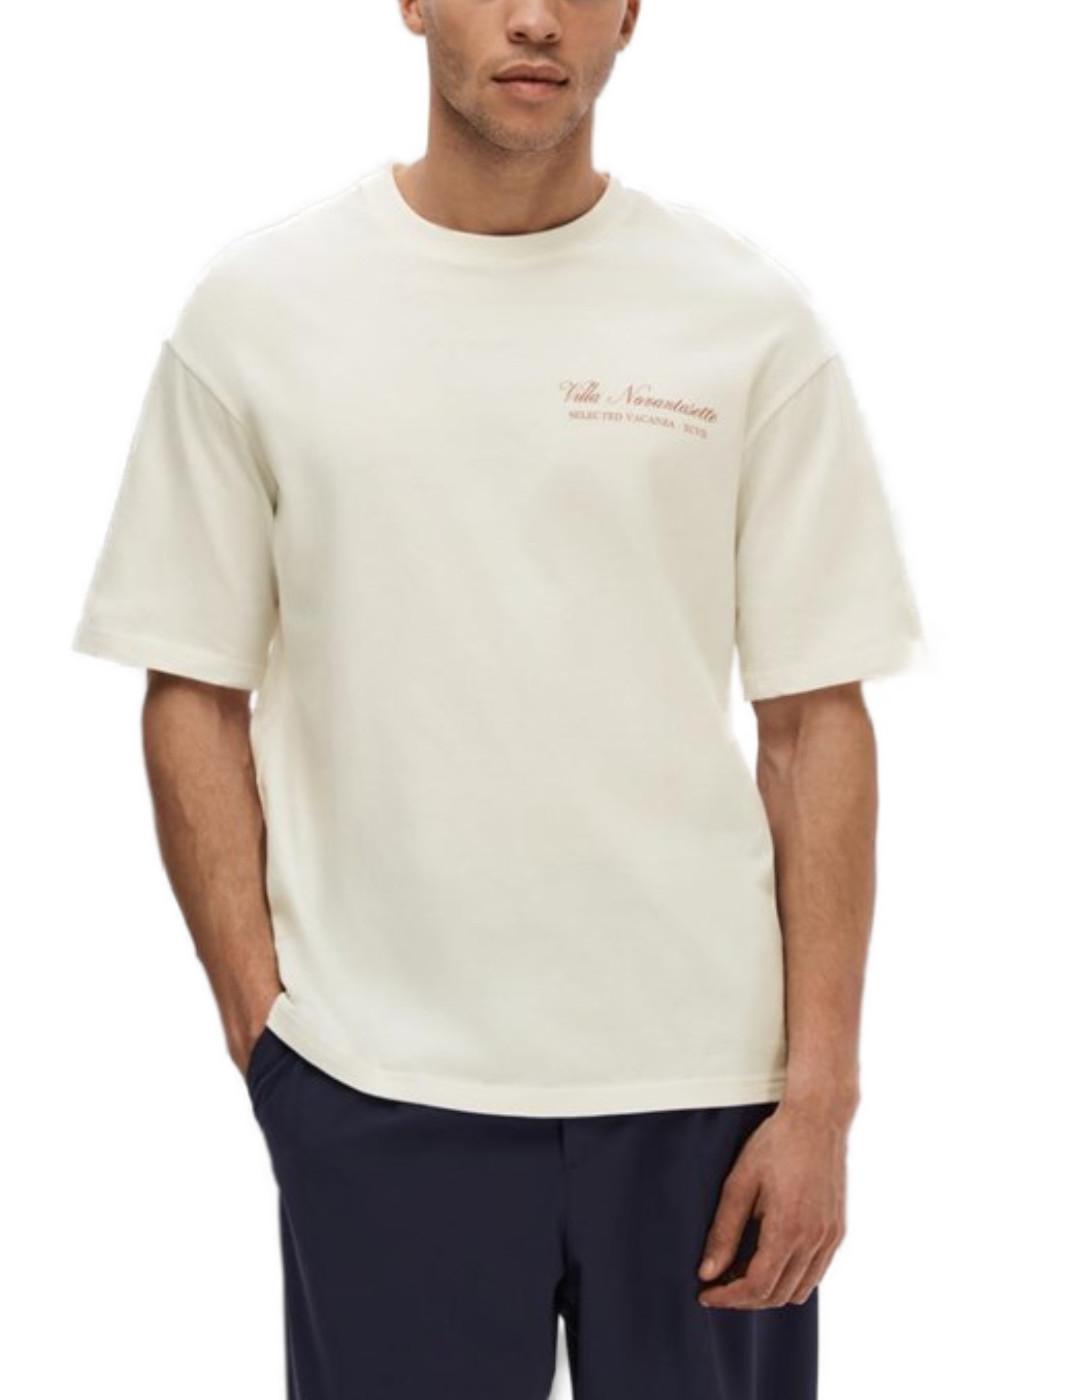 Camiseta Selected Loose blanca manga corta para hombre